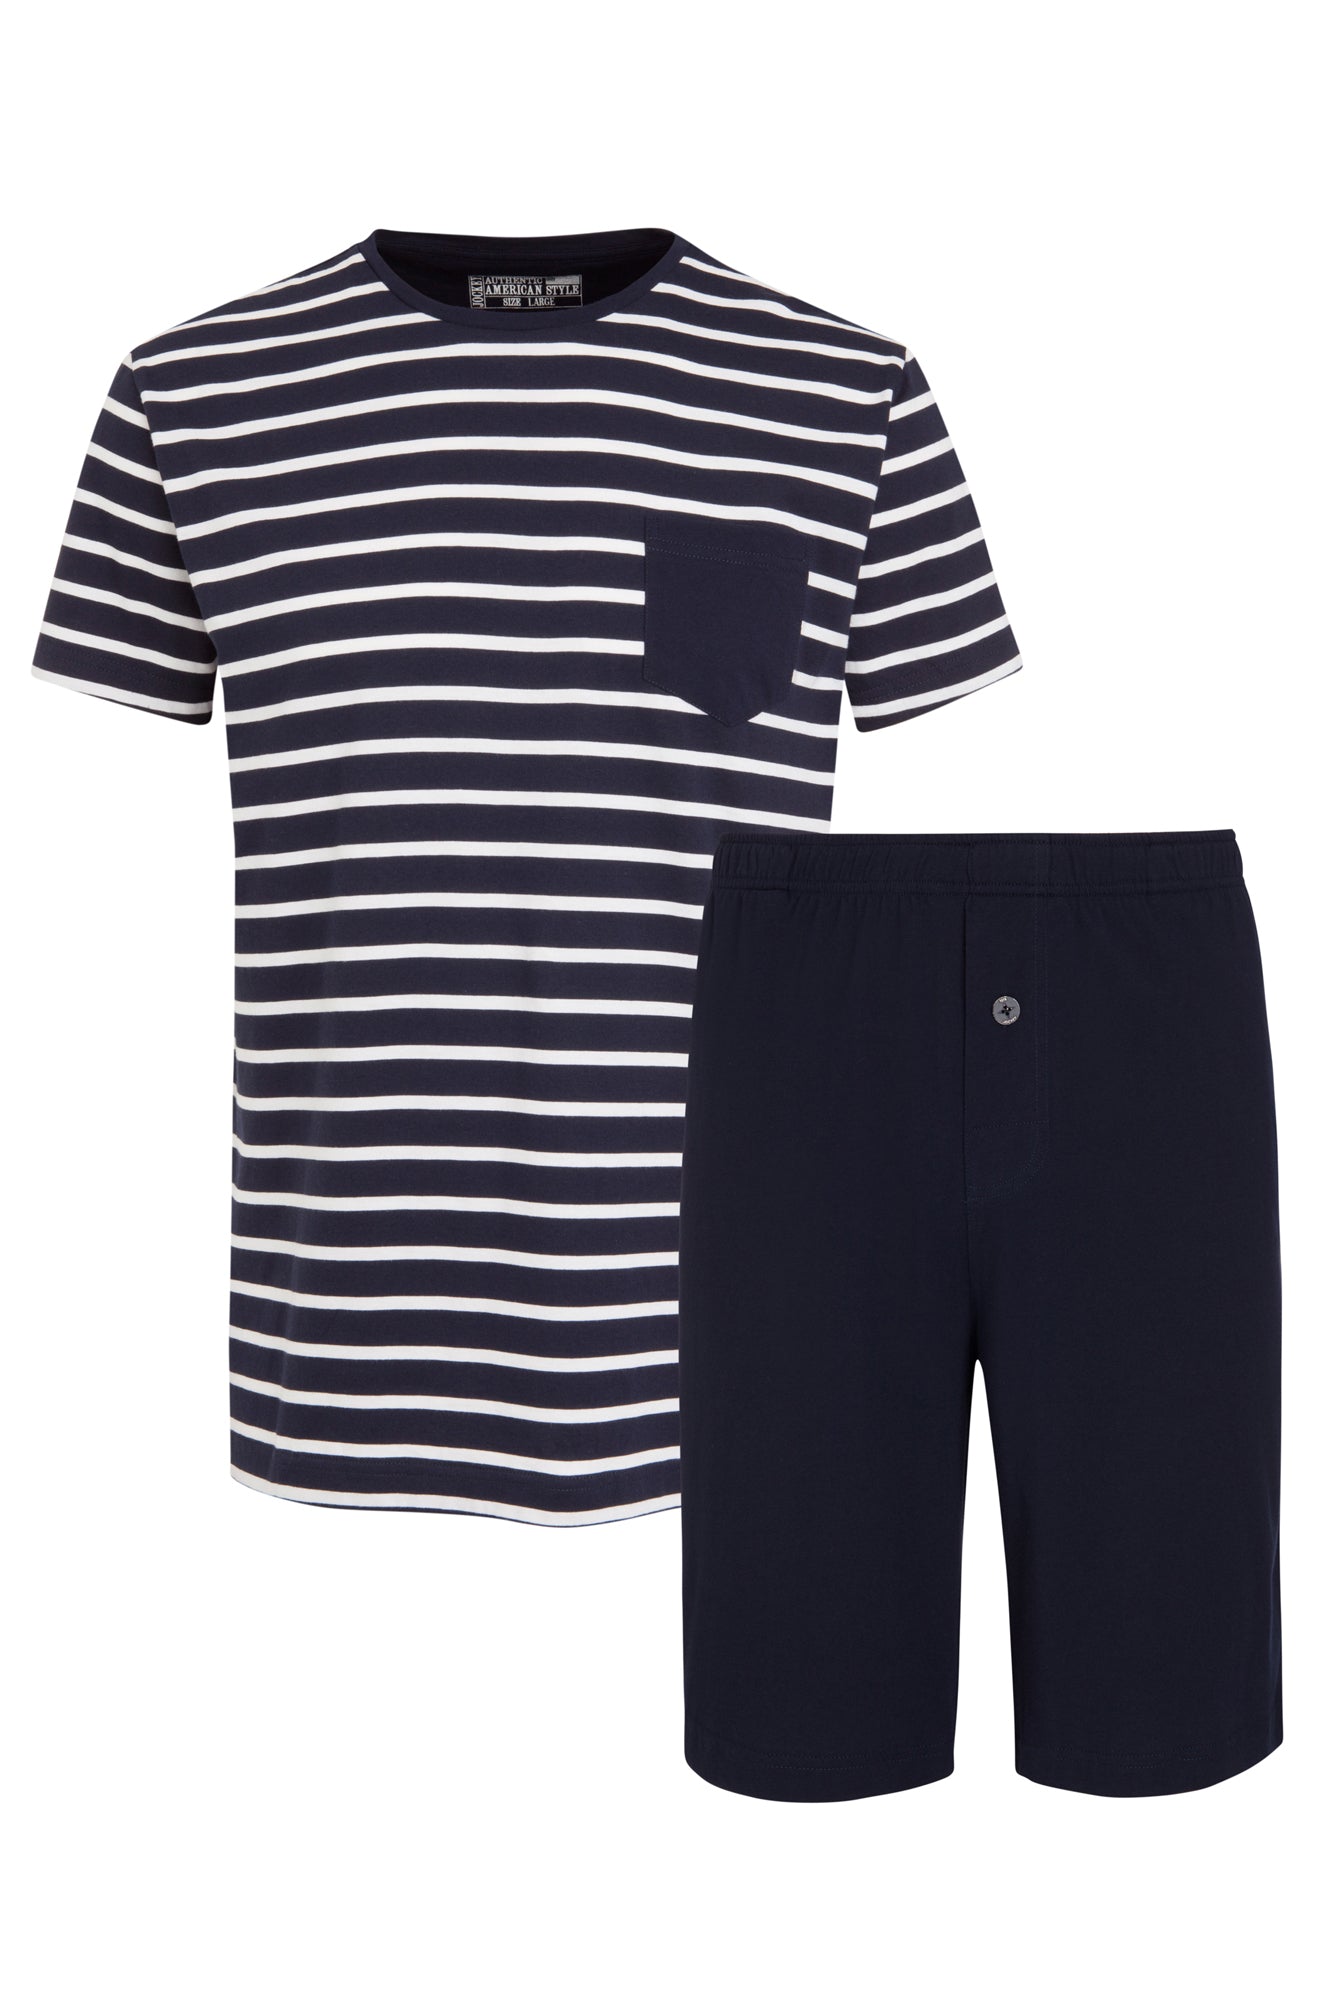 Jockey® Everyday Nautical Stripe 1/2 Knit Short Pyjama | JOCKEY UK